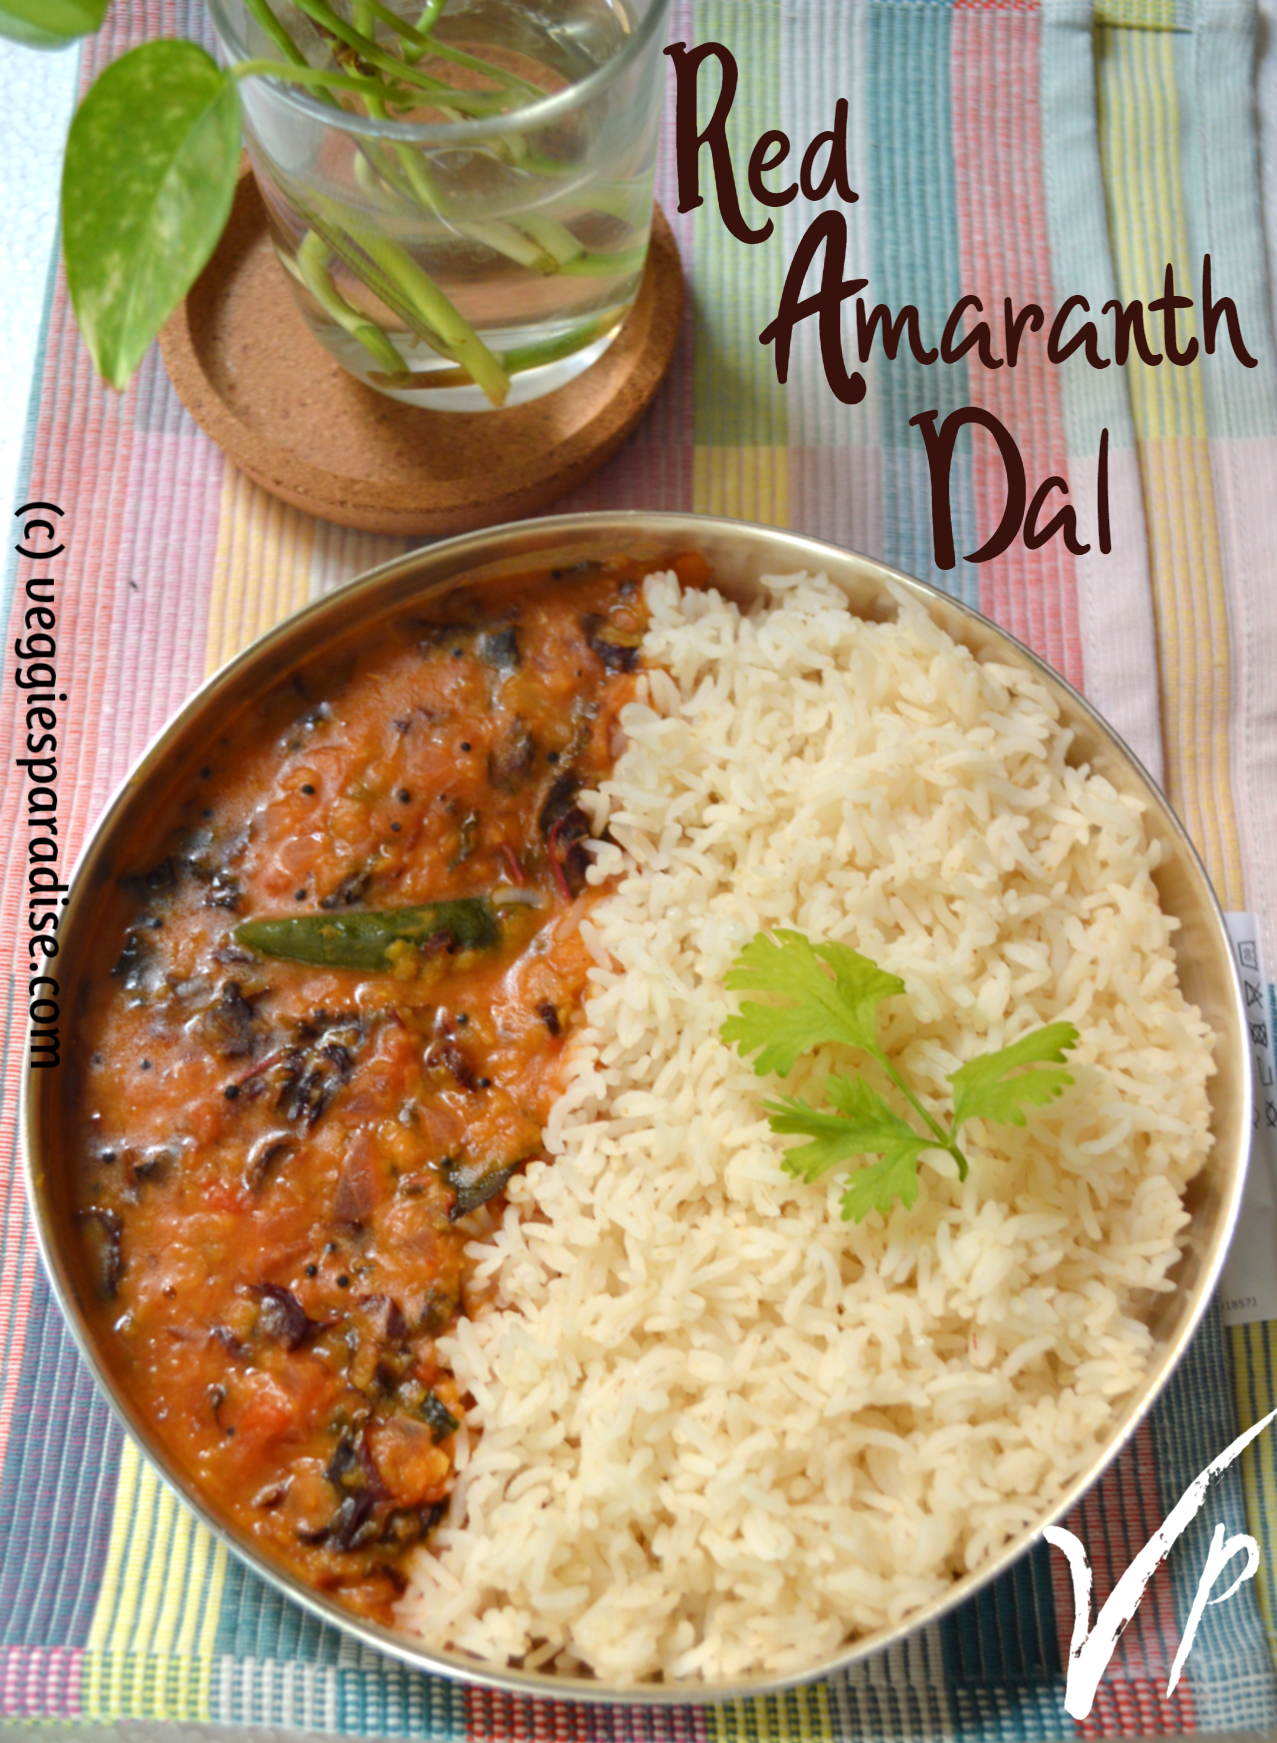 amaranth with tuvar dal